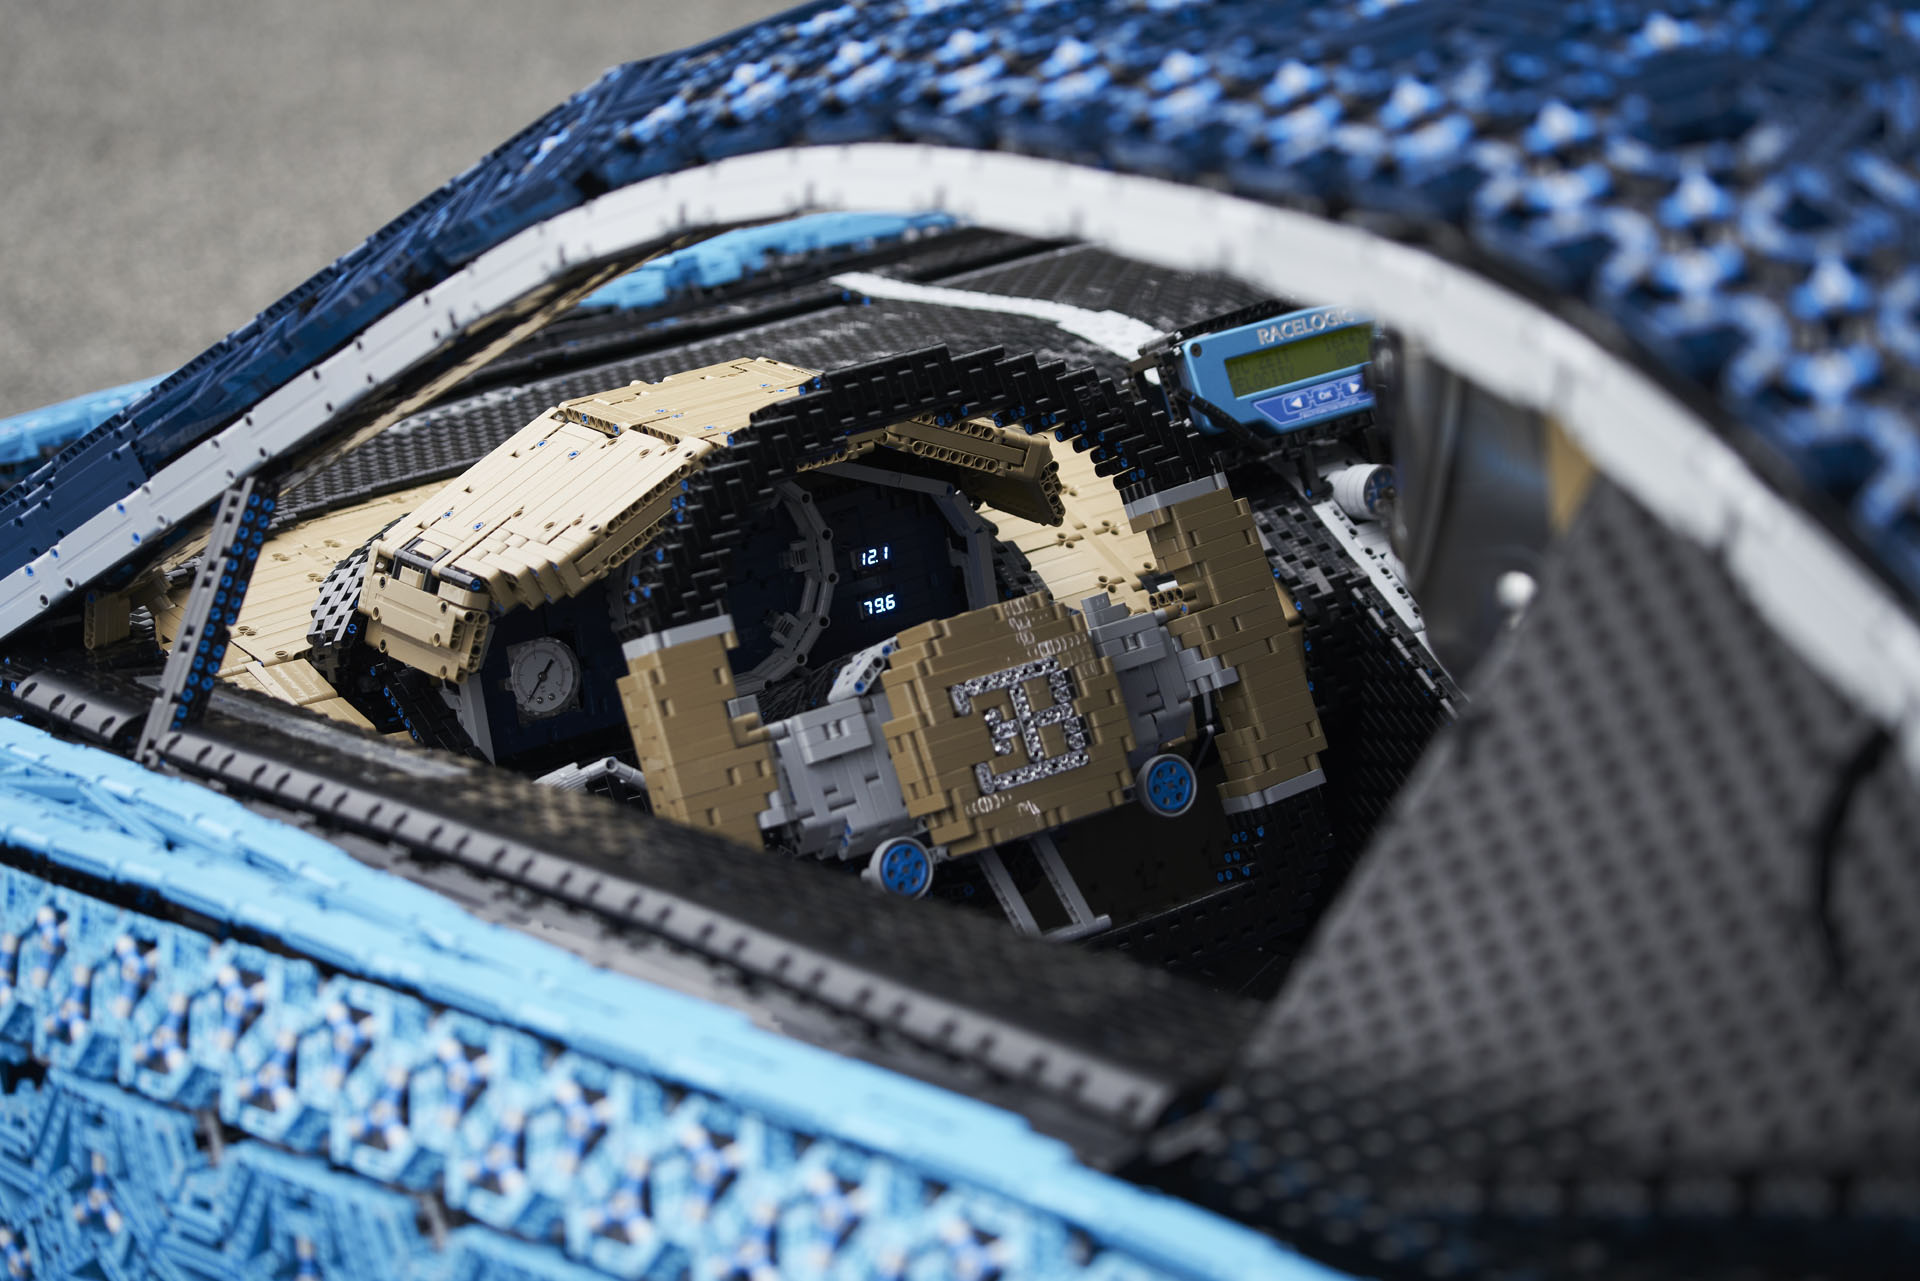 Watch 'Fastest' Lego Bugatti Chiron Shatter Into Pieces